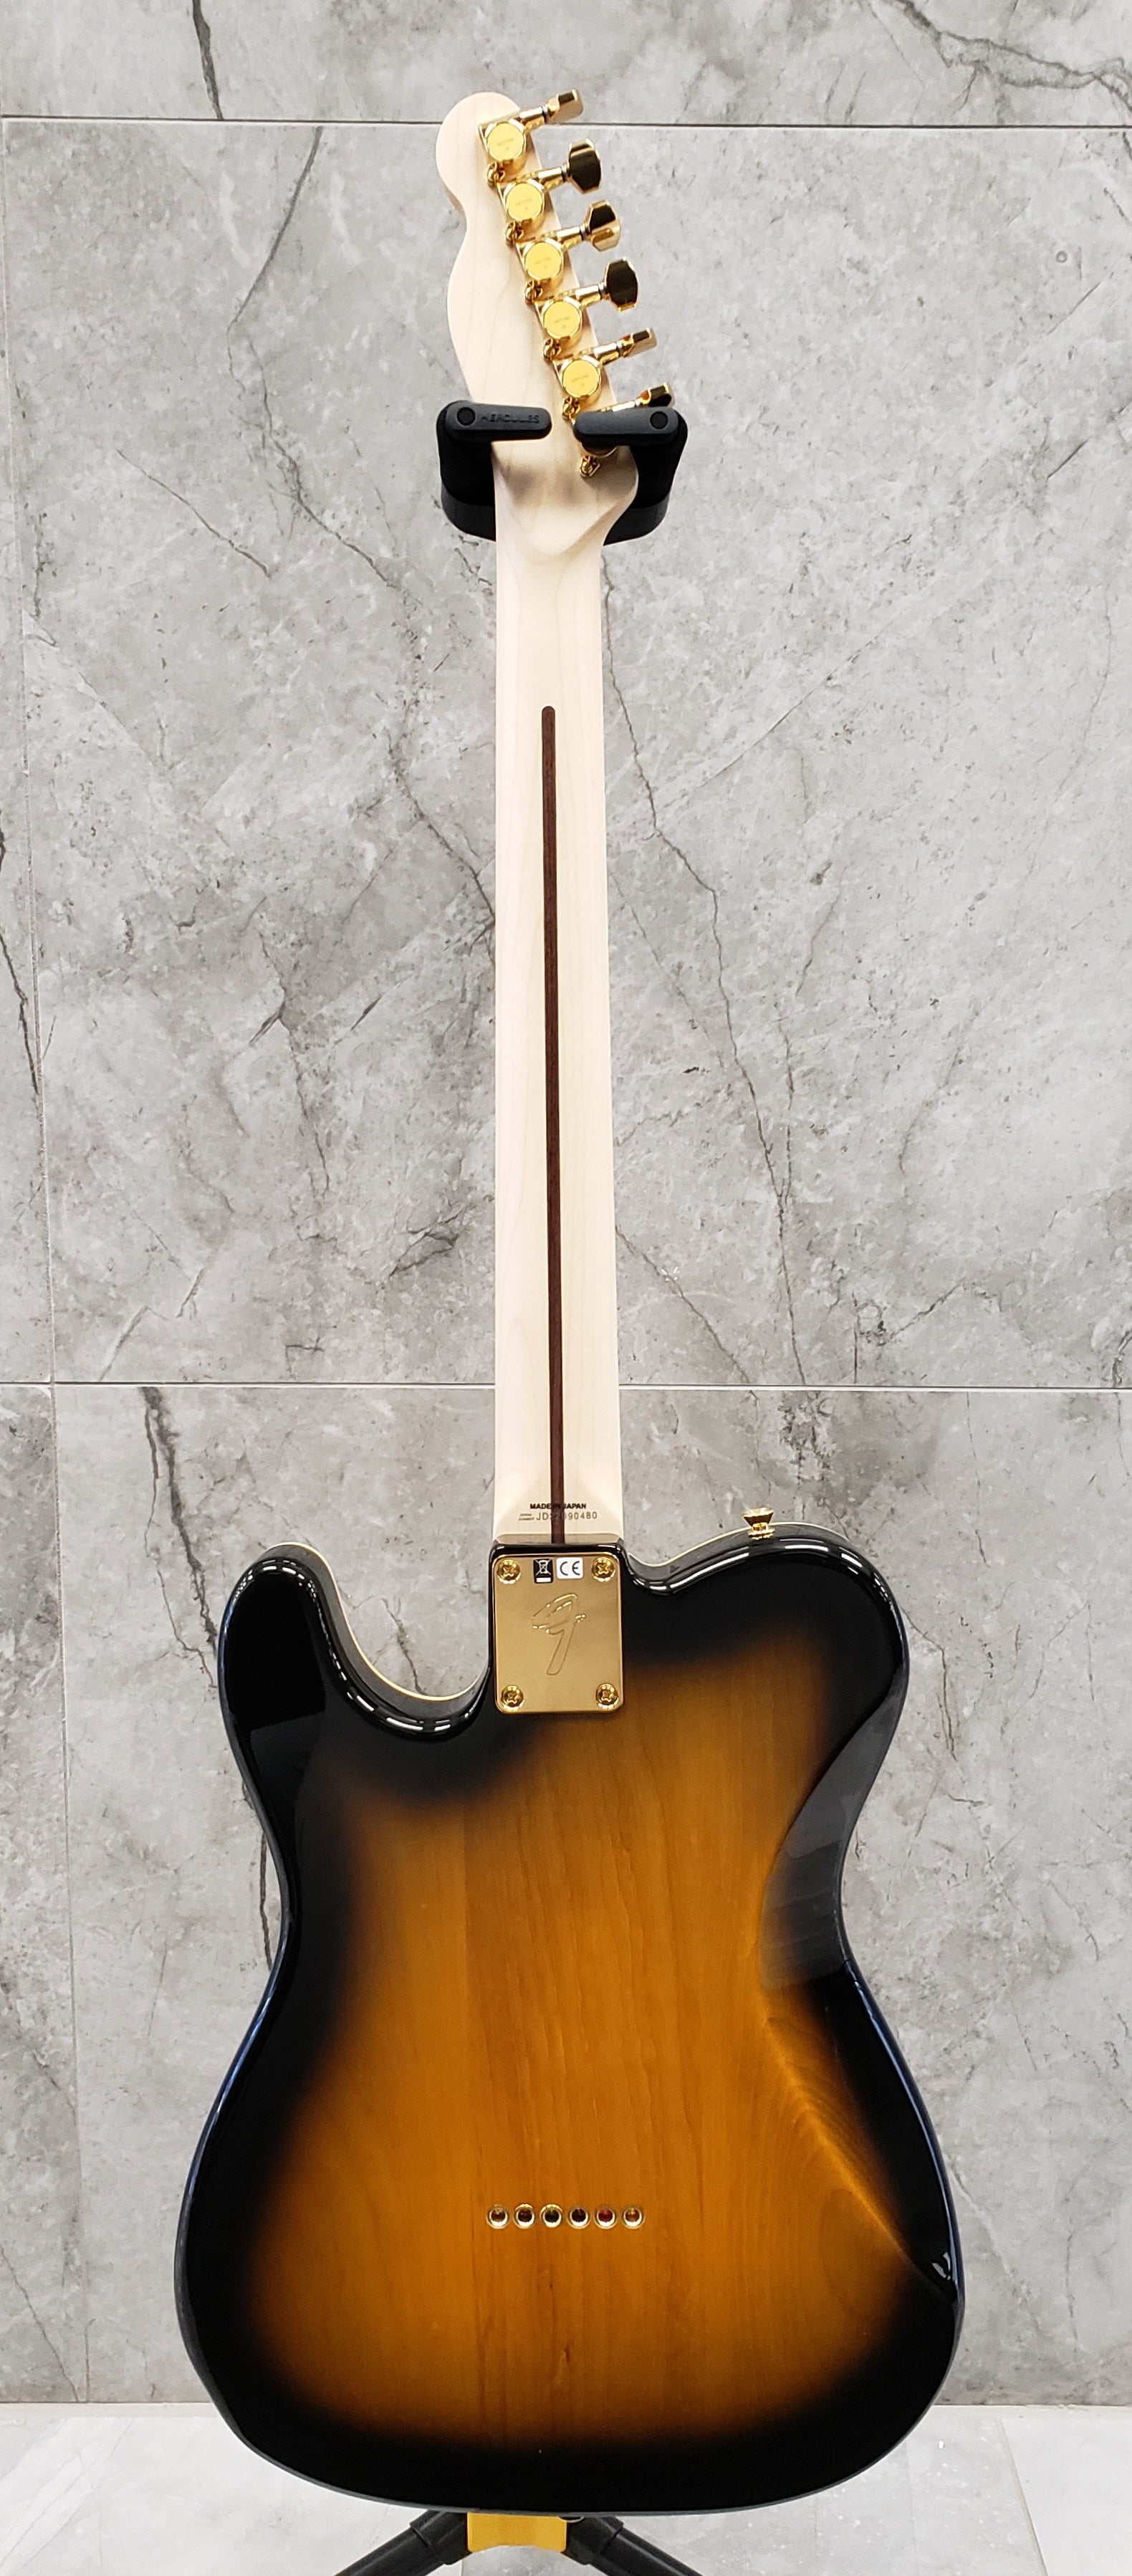 Fender Richie Kotzen Signature Telecaster Made in Japan Maple Fingerboard Brown Sunburst 0255202532 SERIAL NUMBER JD22090480 - 8.4 LBS